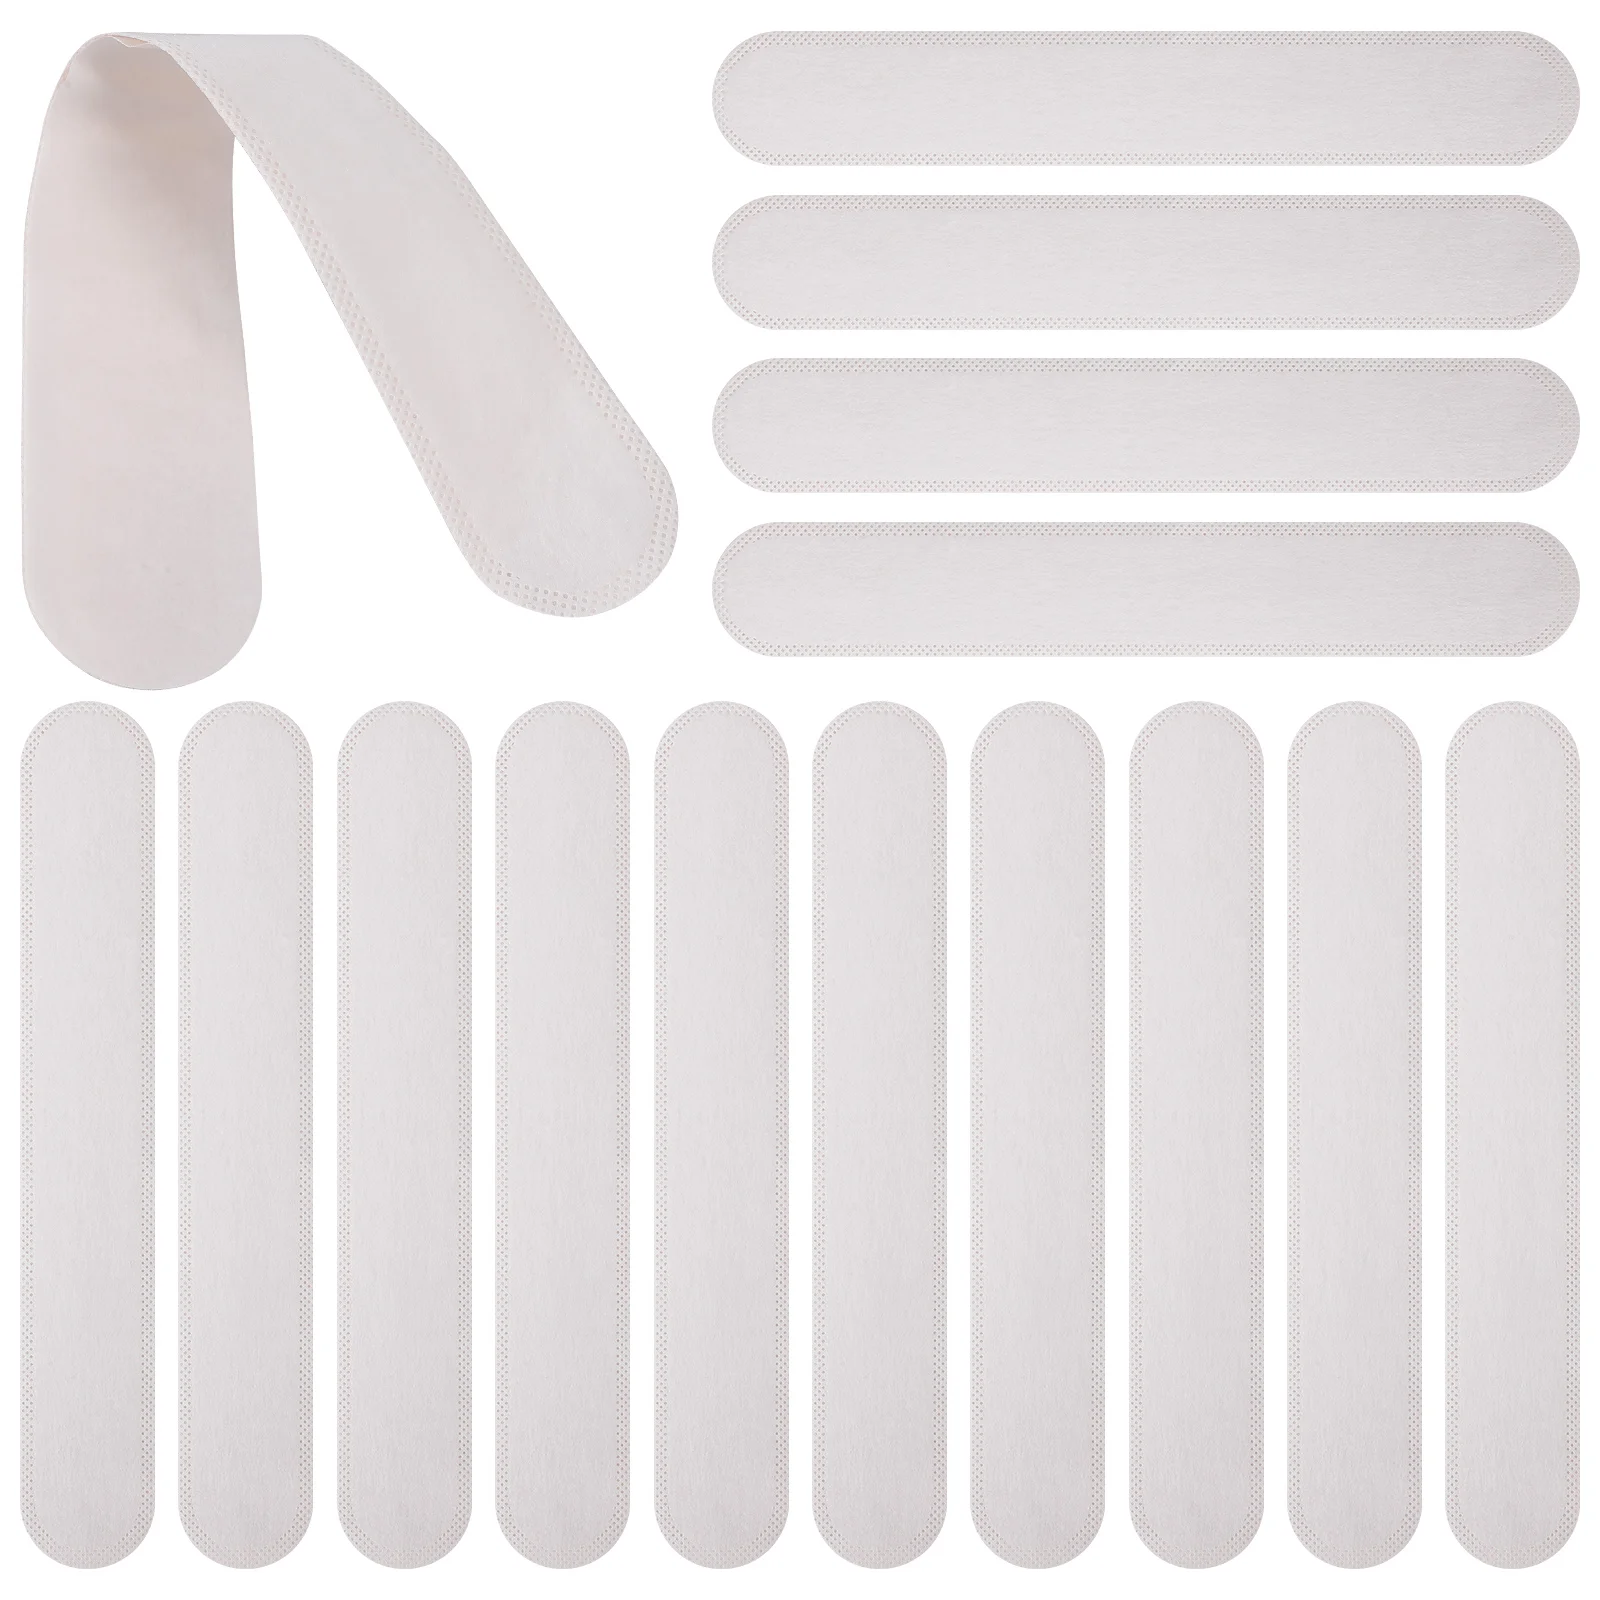 

Artibetter 50pcs Disposable Collar Sweatband Sweat Absorbing Hat Pads Caps Dust Guard Tape (White)